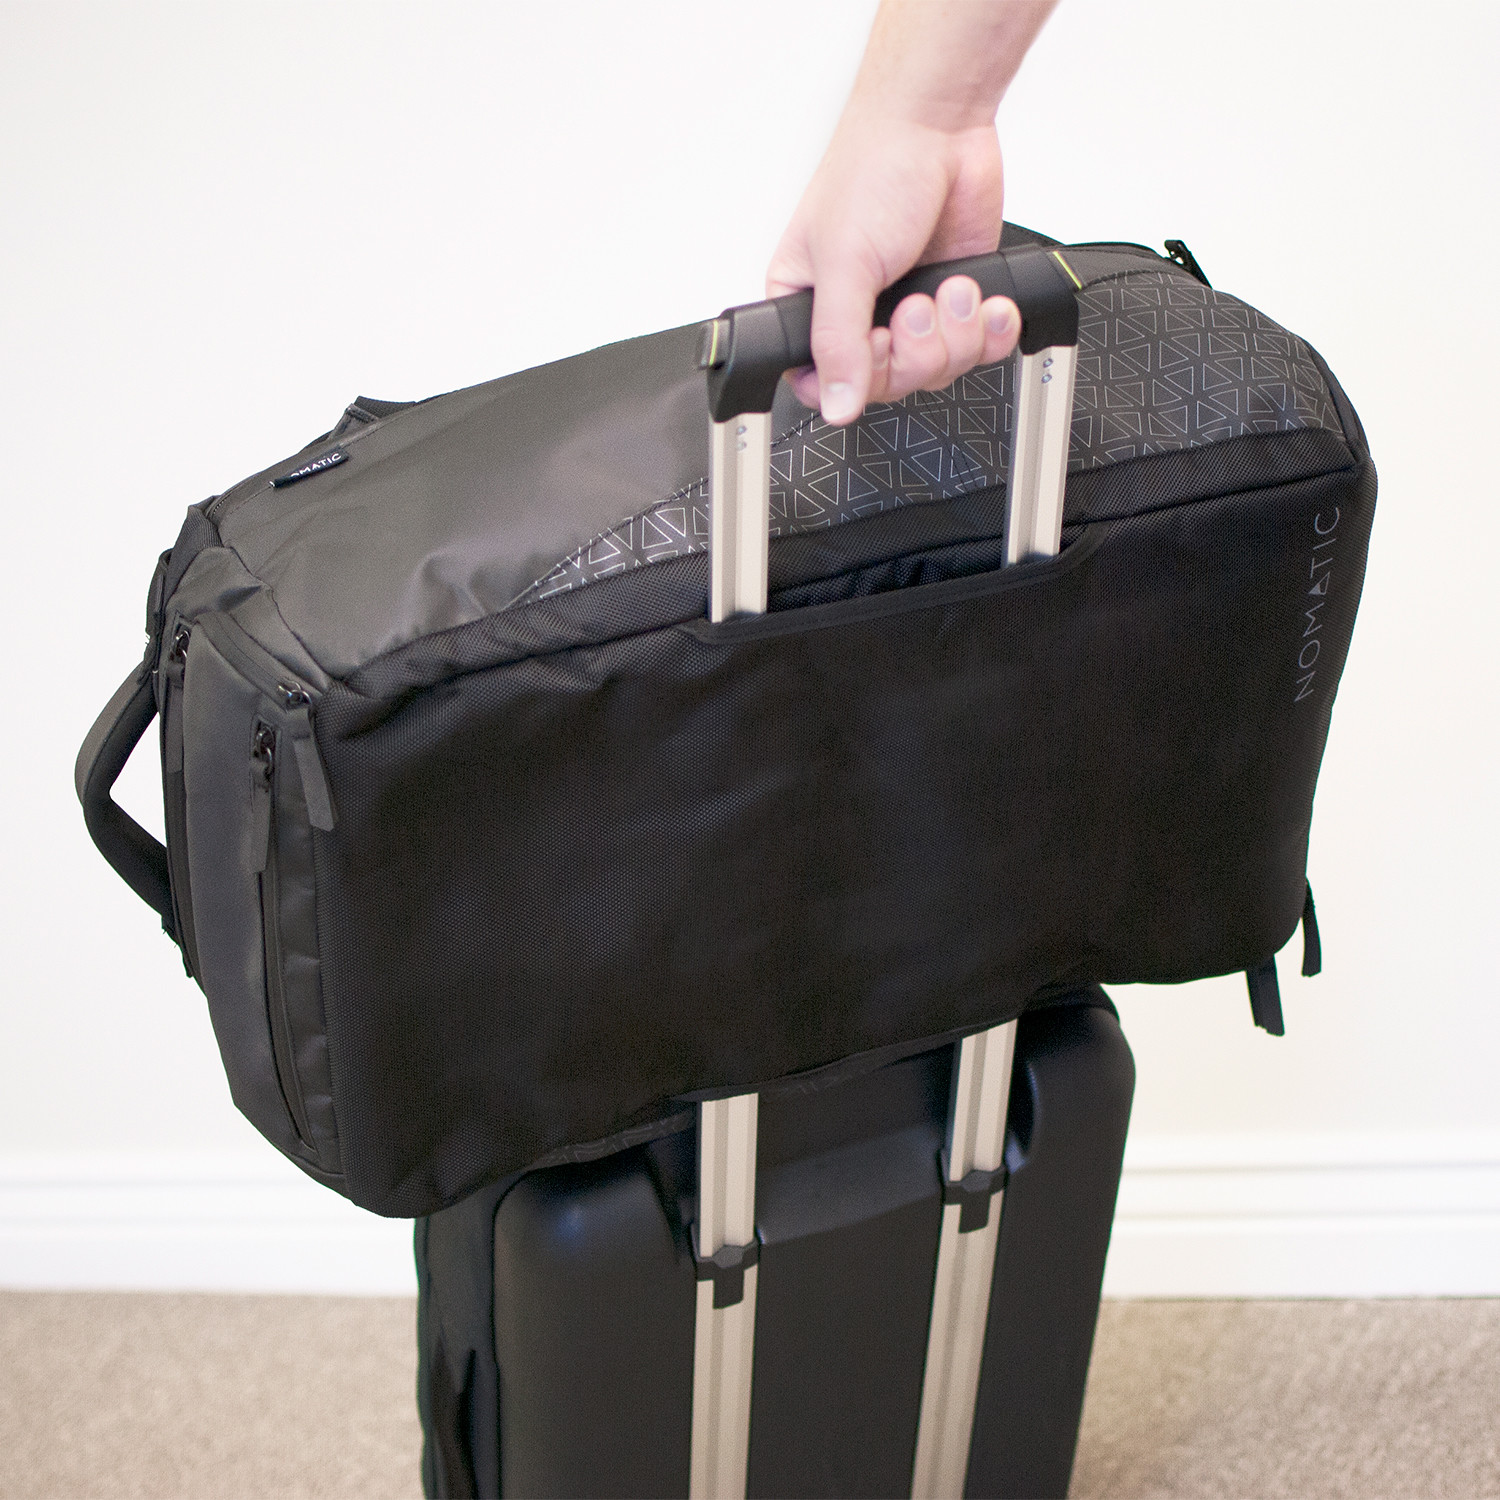 the travel bag